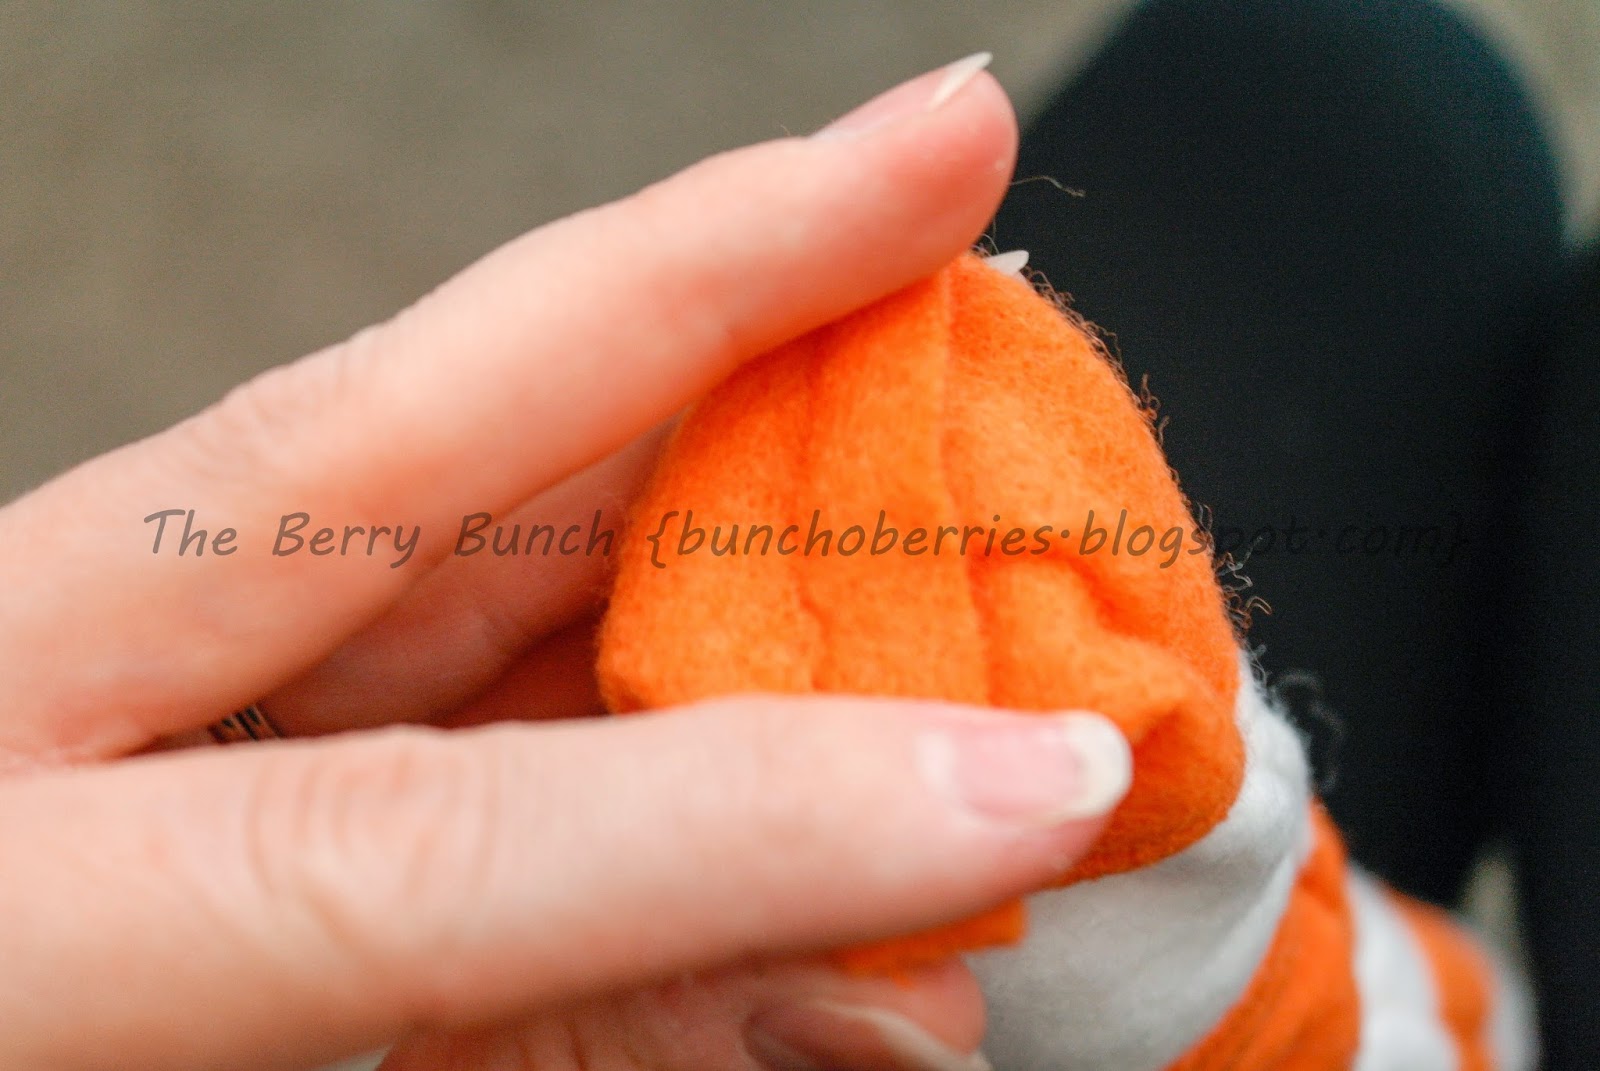 The Berry Bunch: Tiger Tail Tutorial: GYCT Design's Make Believe Week